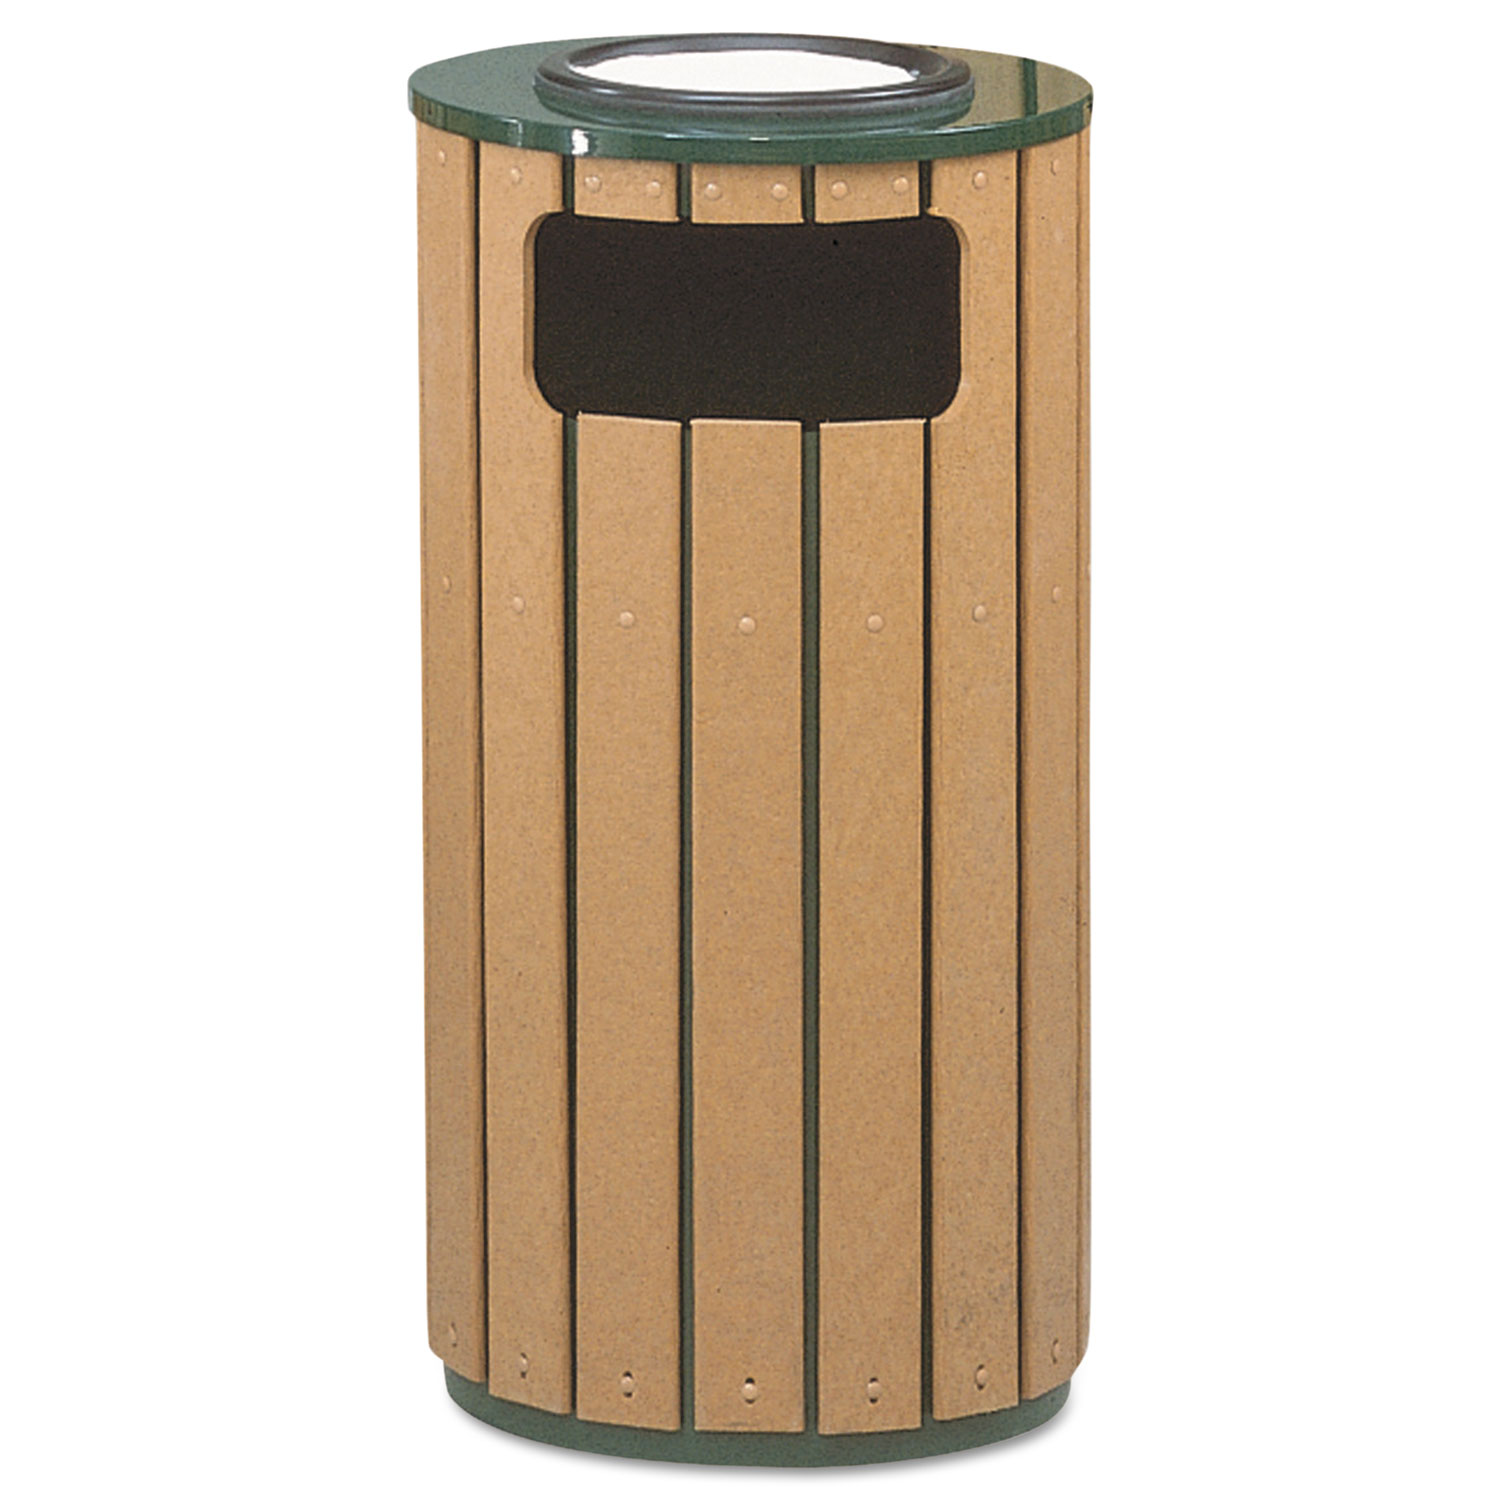 Regent 50 Ash/Trash Receptacle, Green Enamel/Brown Cedar Plastic, 12 gal